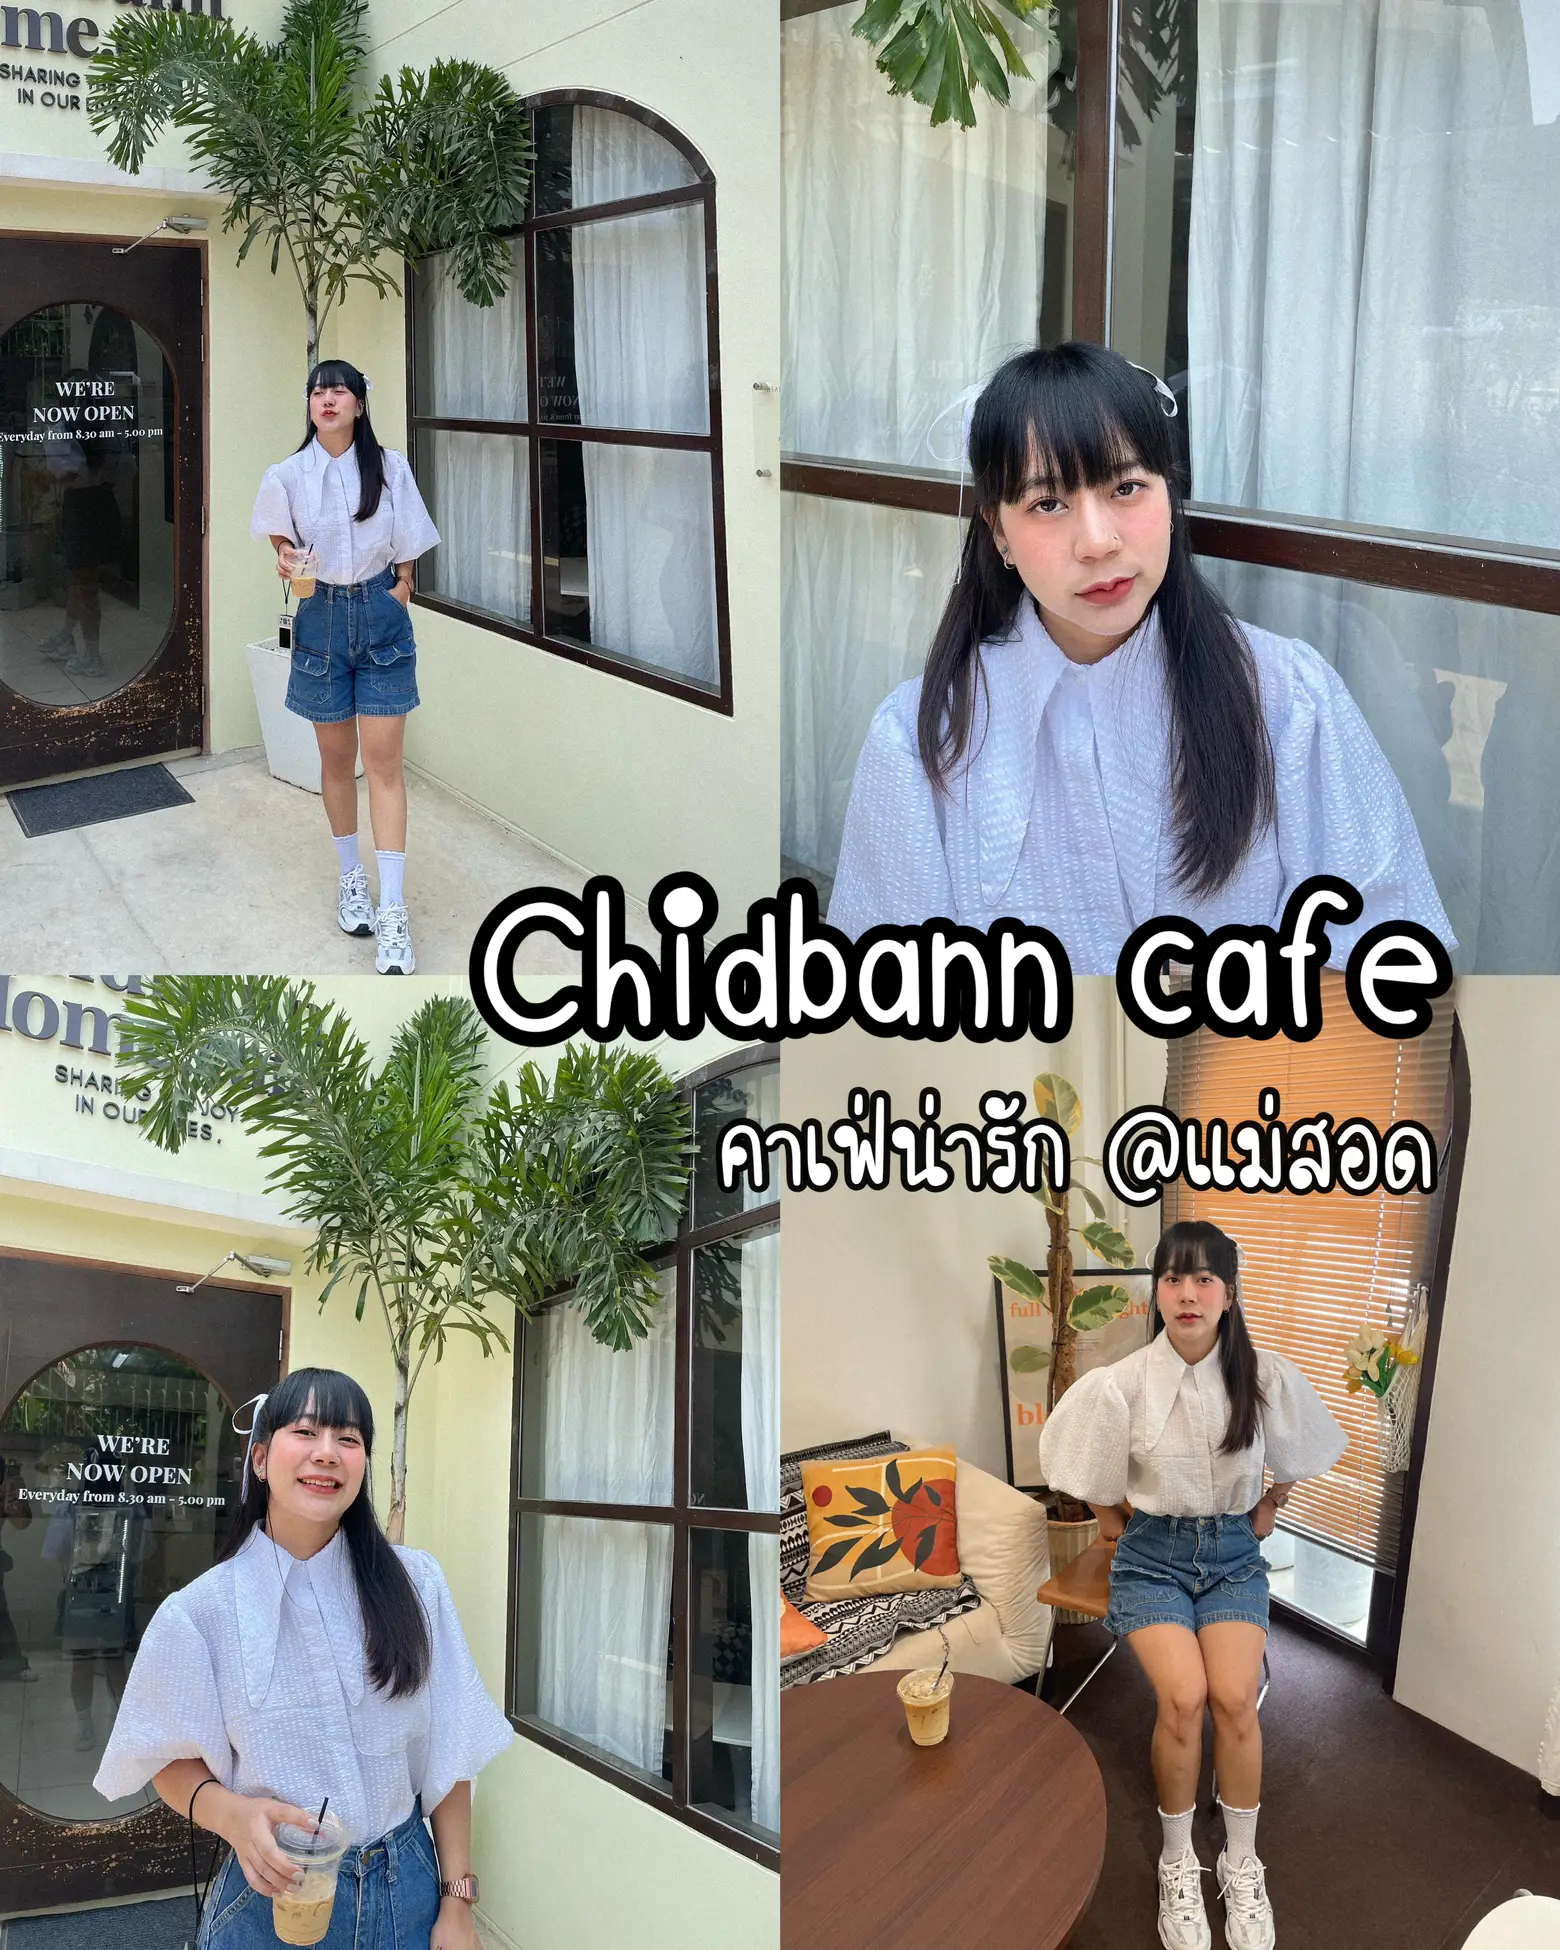 Chidbann cafe | Mae Neighborhood Cafe most inserted so cute